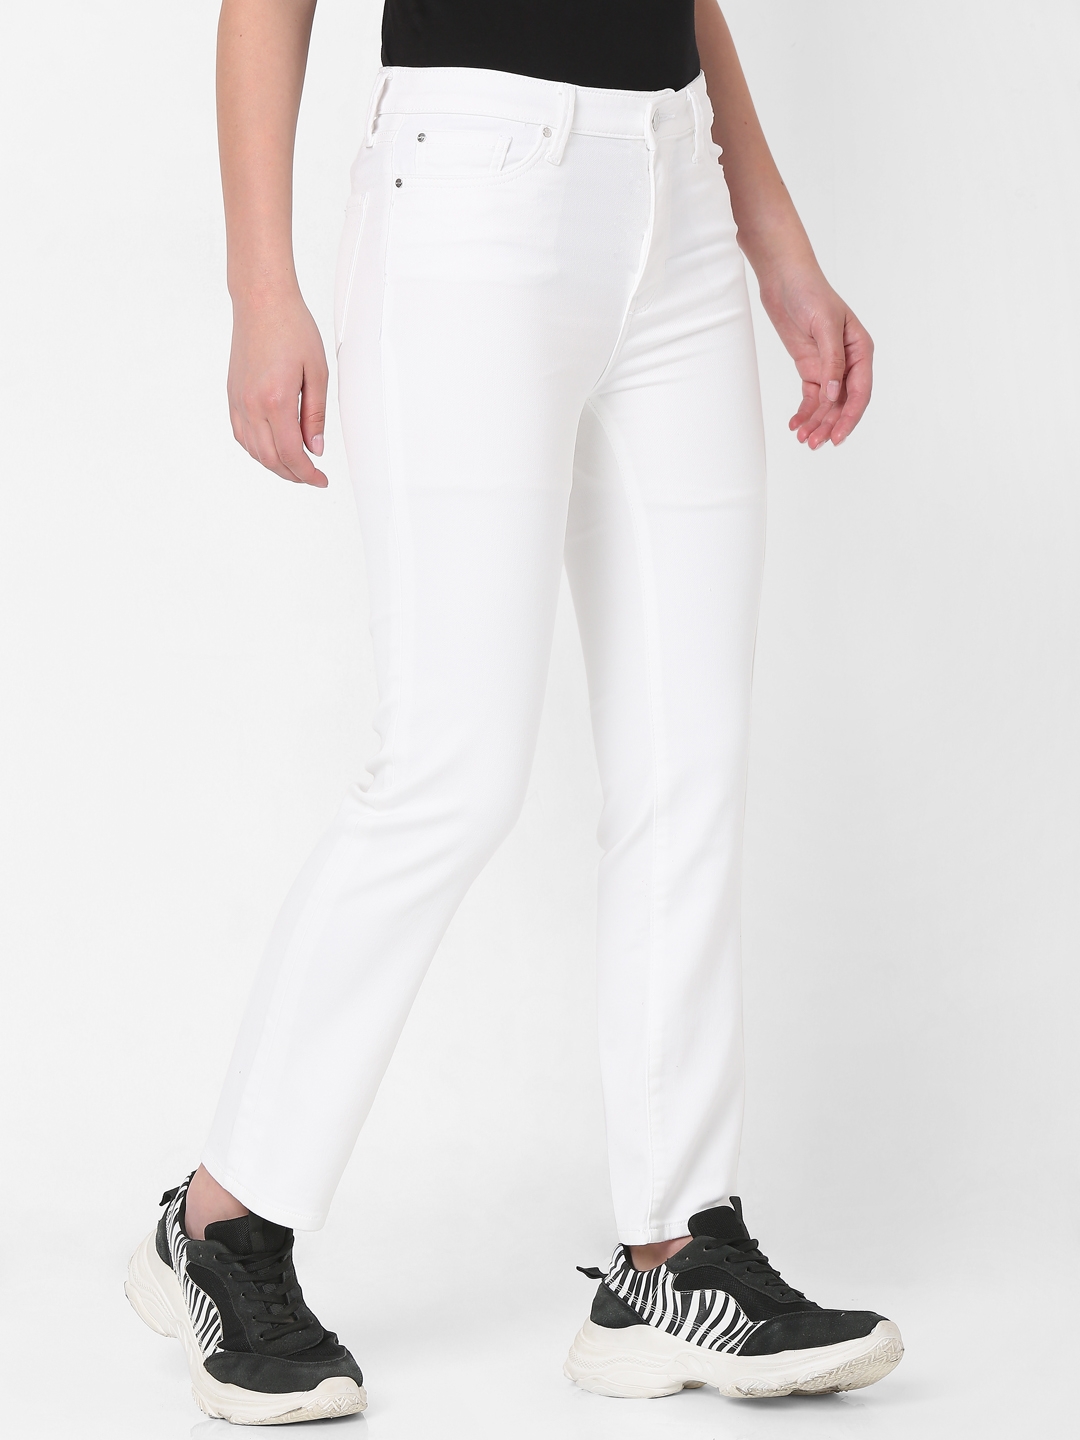 spykar | Women's White Cotton Solid Slim Jeans 2